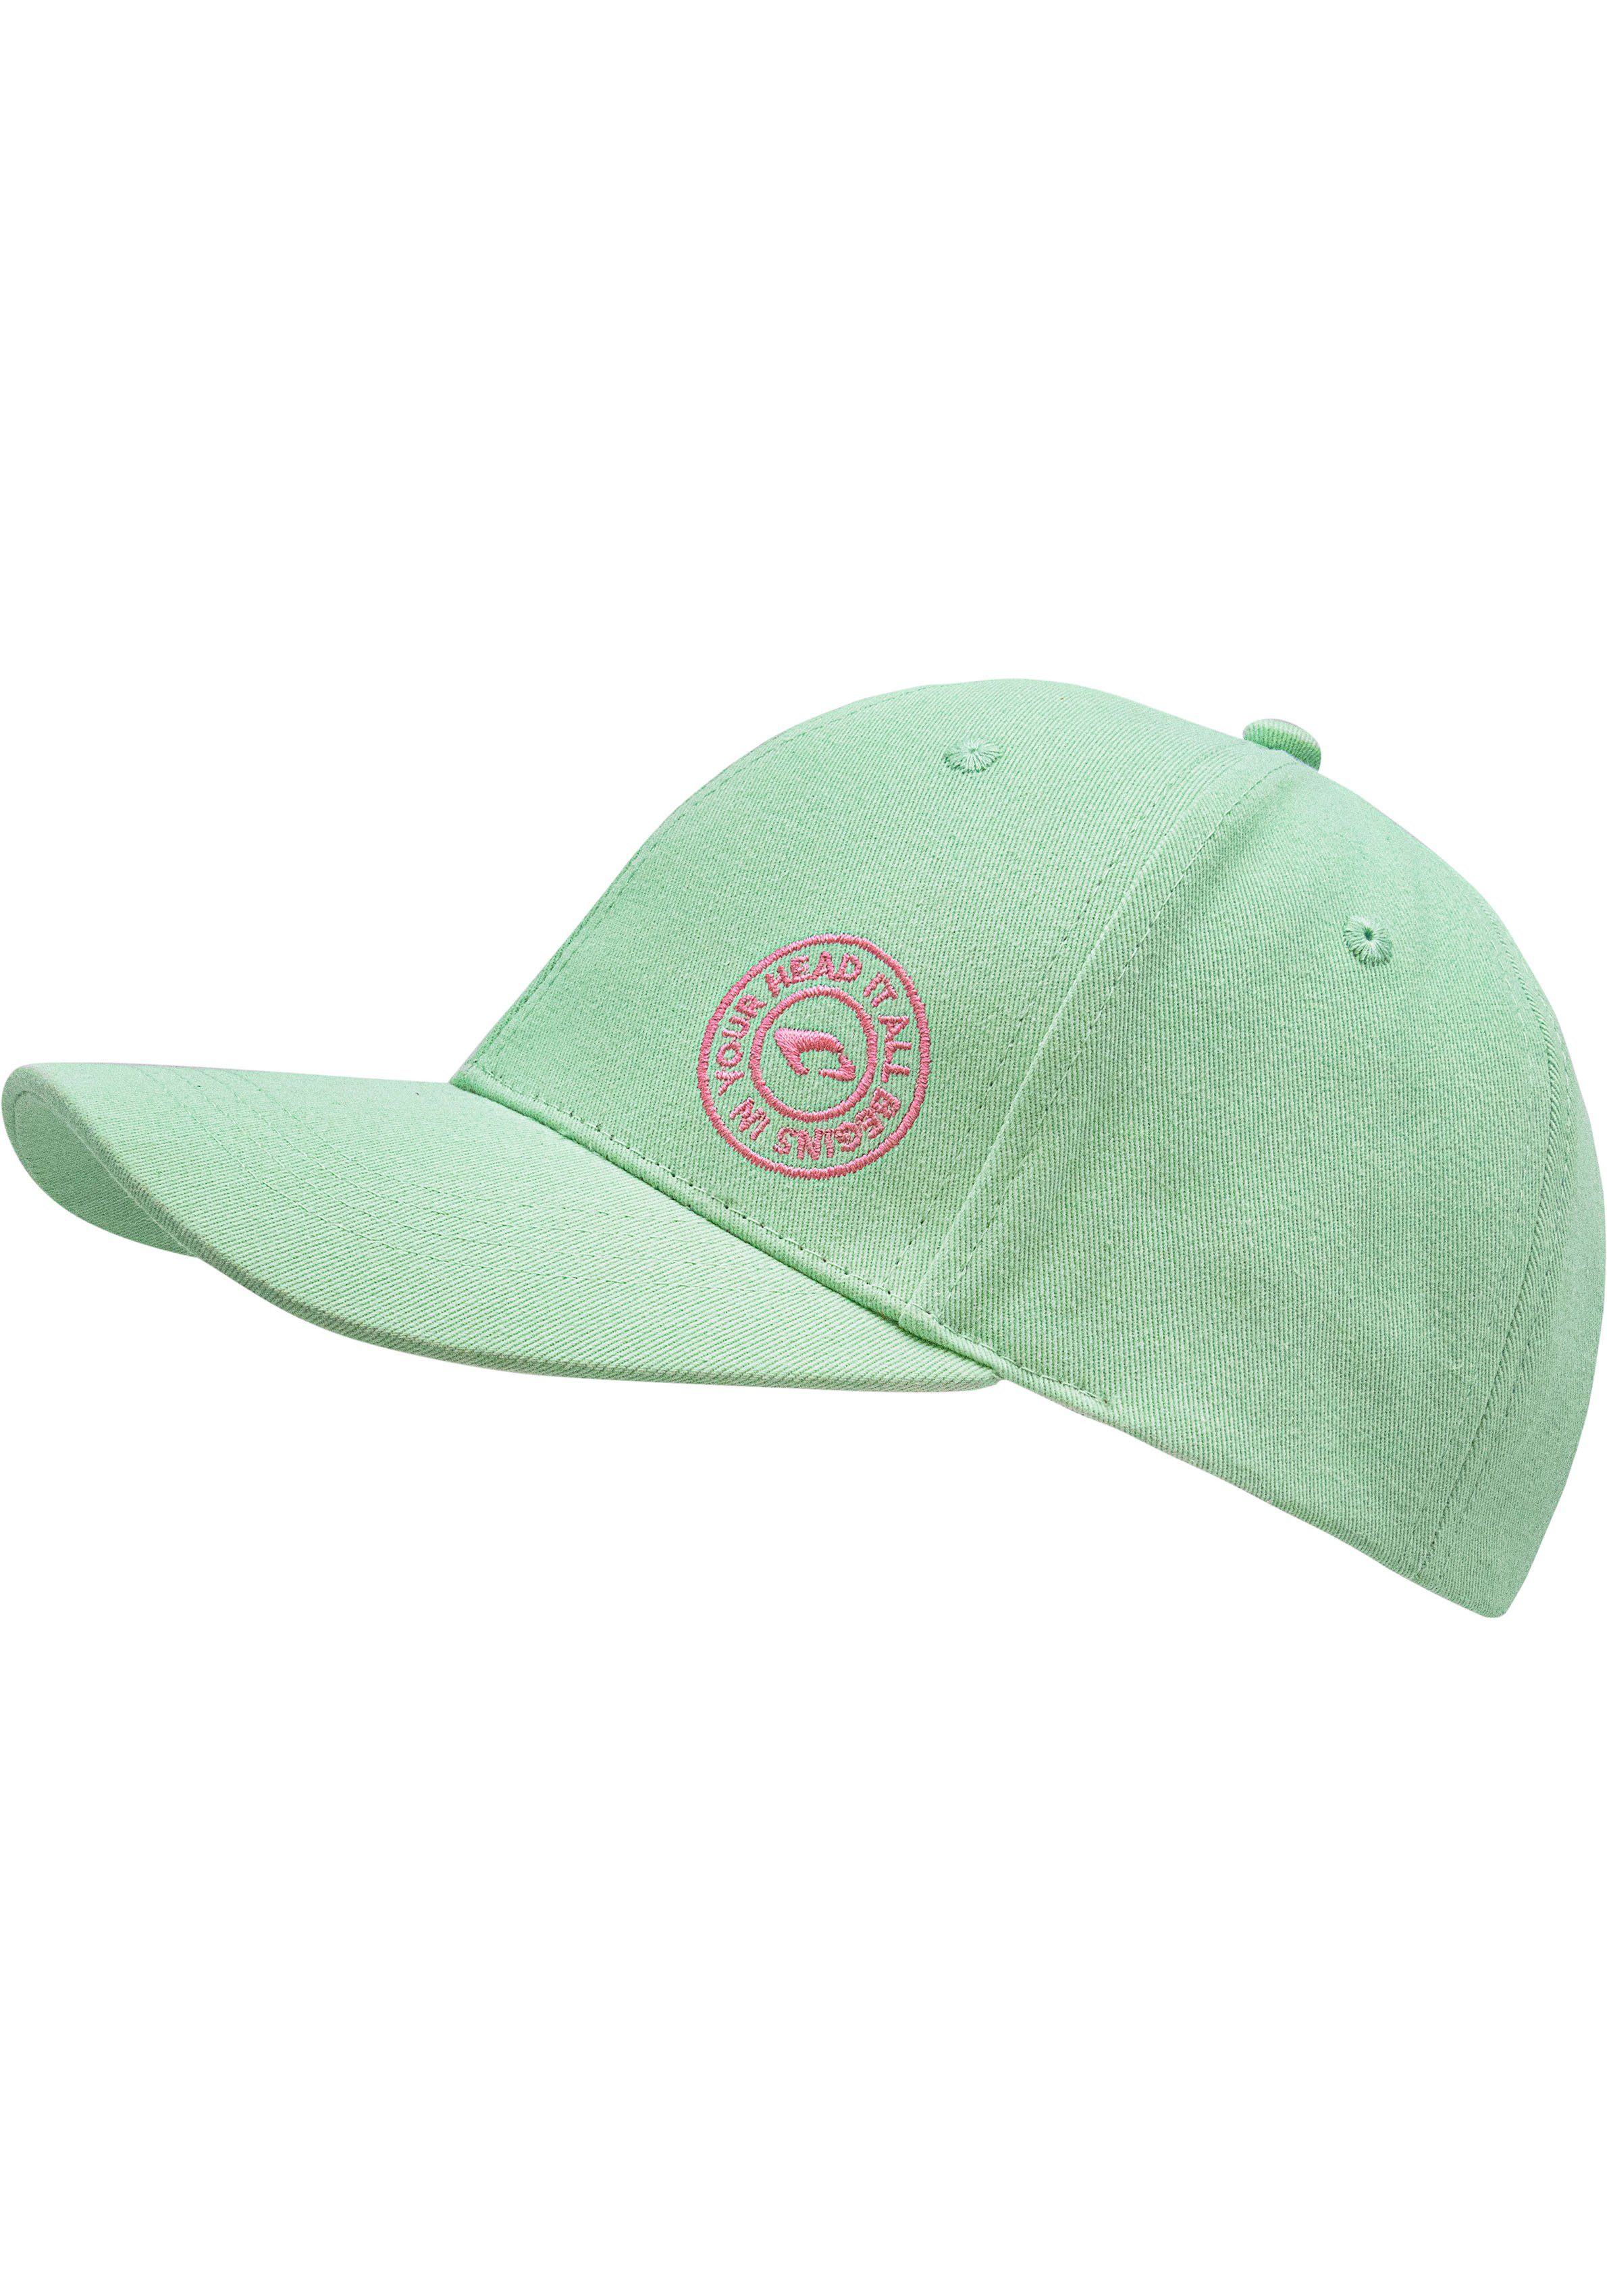 Arklow Cap mint Baseball Hat chillouts